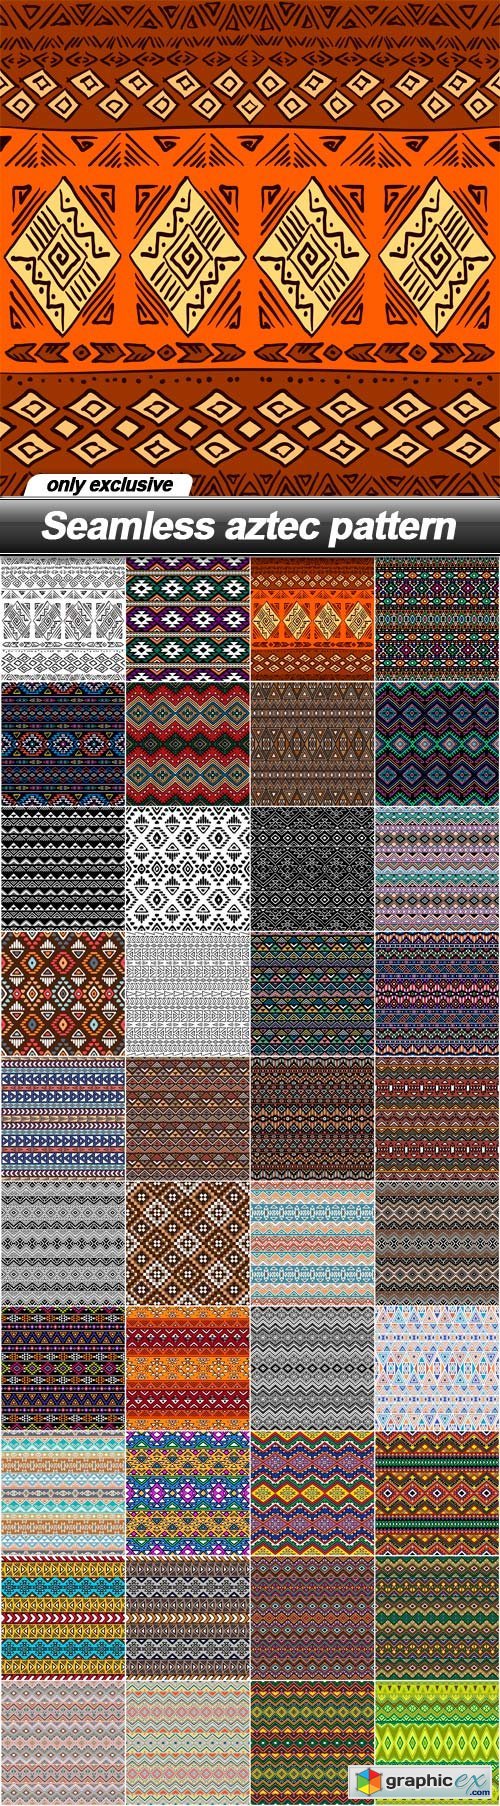 Seamless aztec pattern - 40 EPS